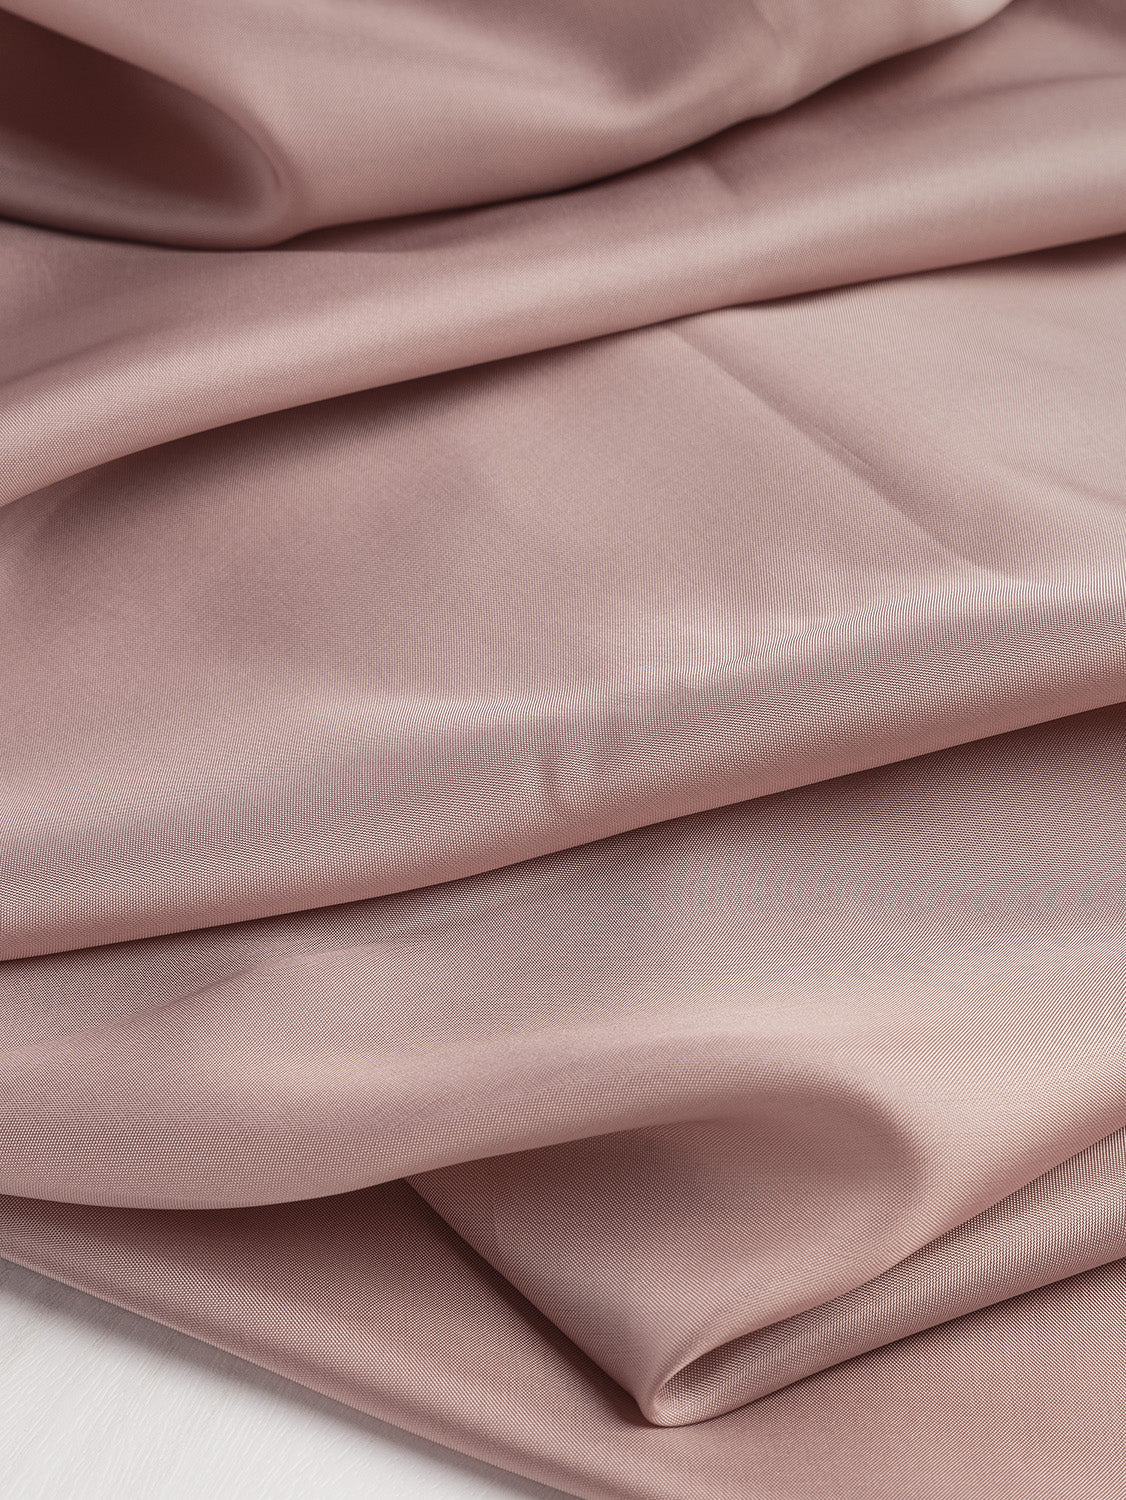 Pink Lining Fabric